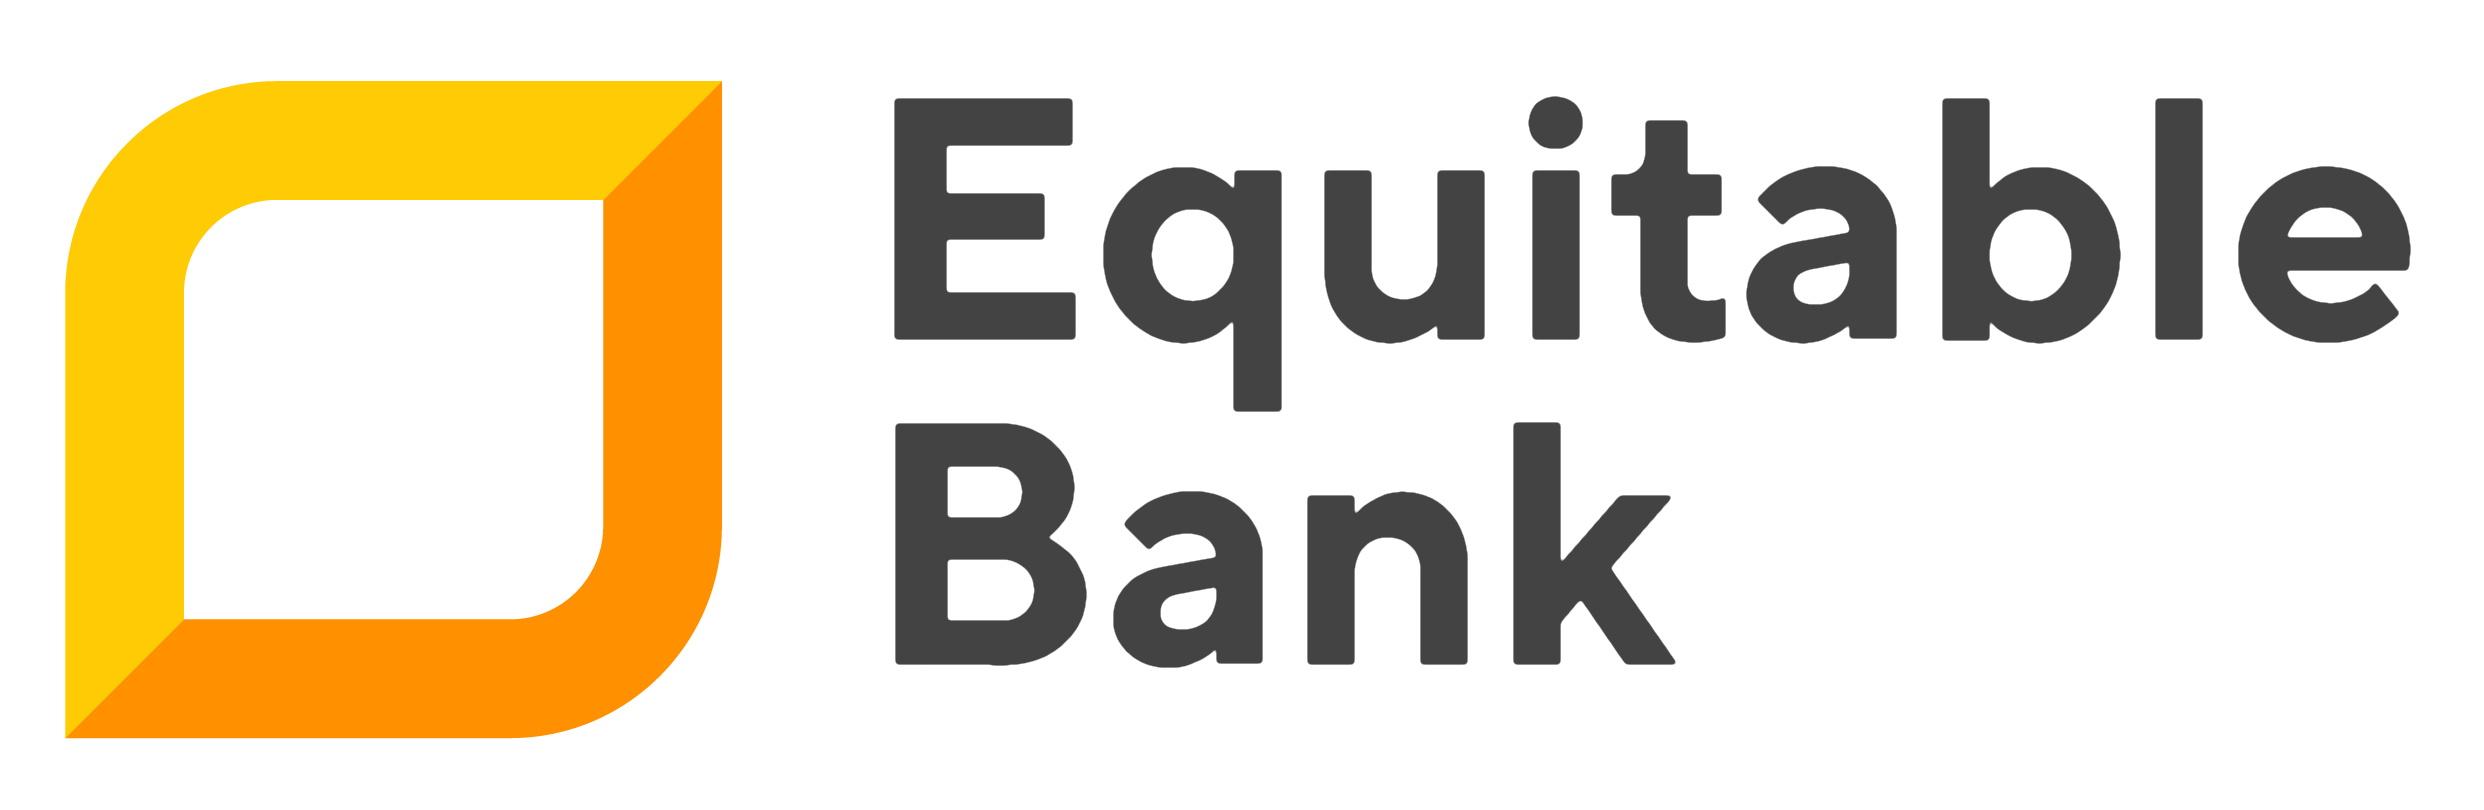 Equitable_bank_logo-1.png